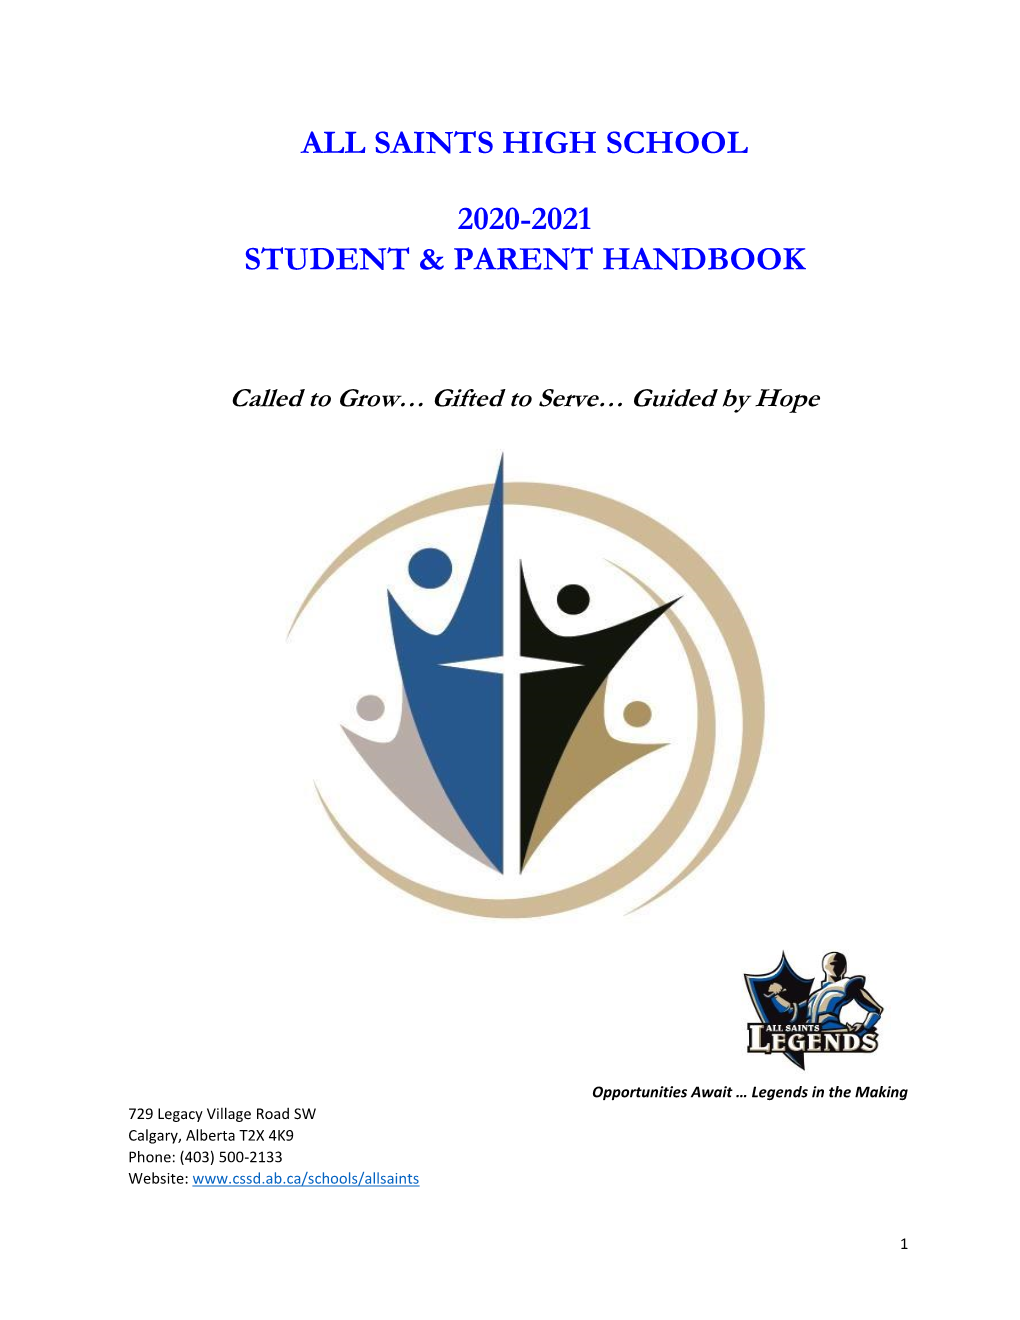 All Saints High School 2020-2021 Student & Parent